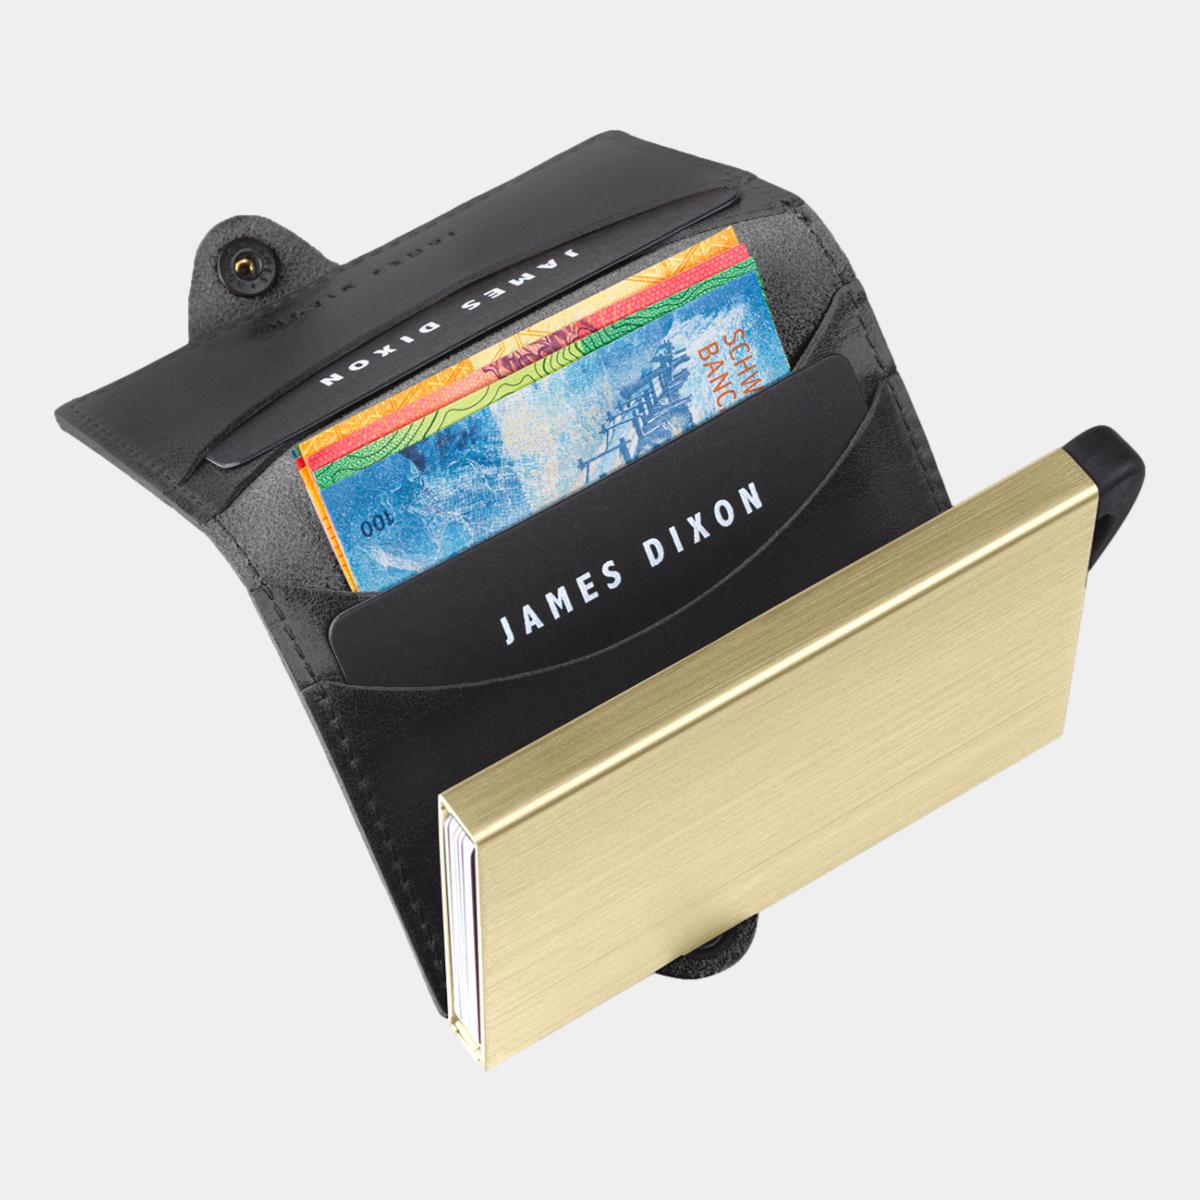 jd0240 james dixon boton vintage black gold wallet notes